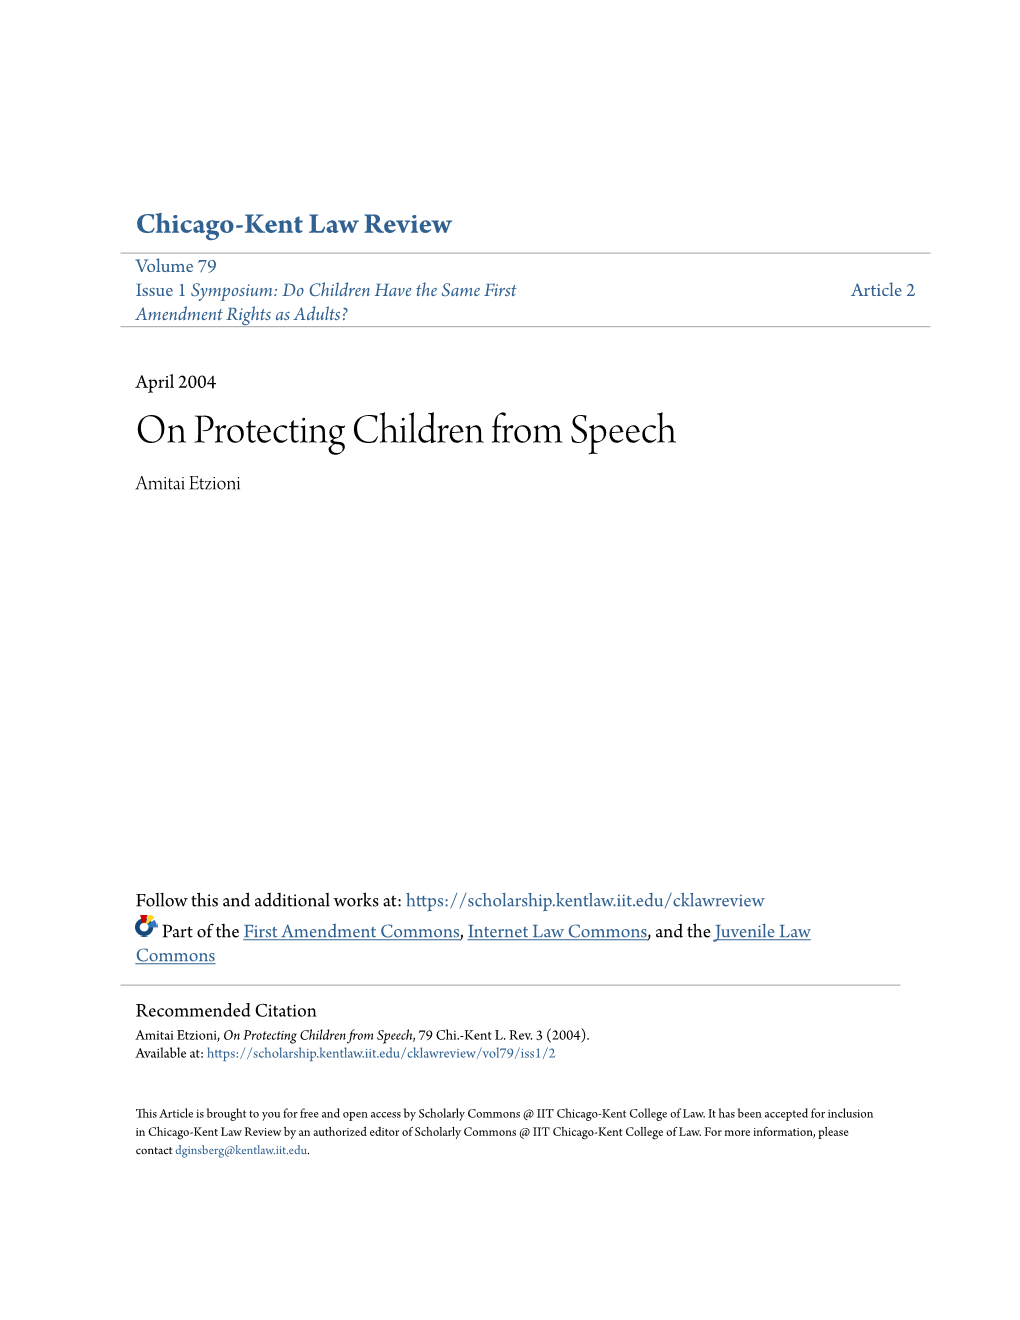 On Protecting Children from Speech Amitai Etzioni